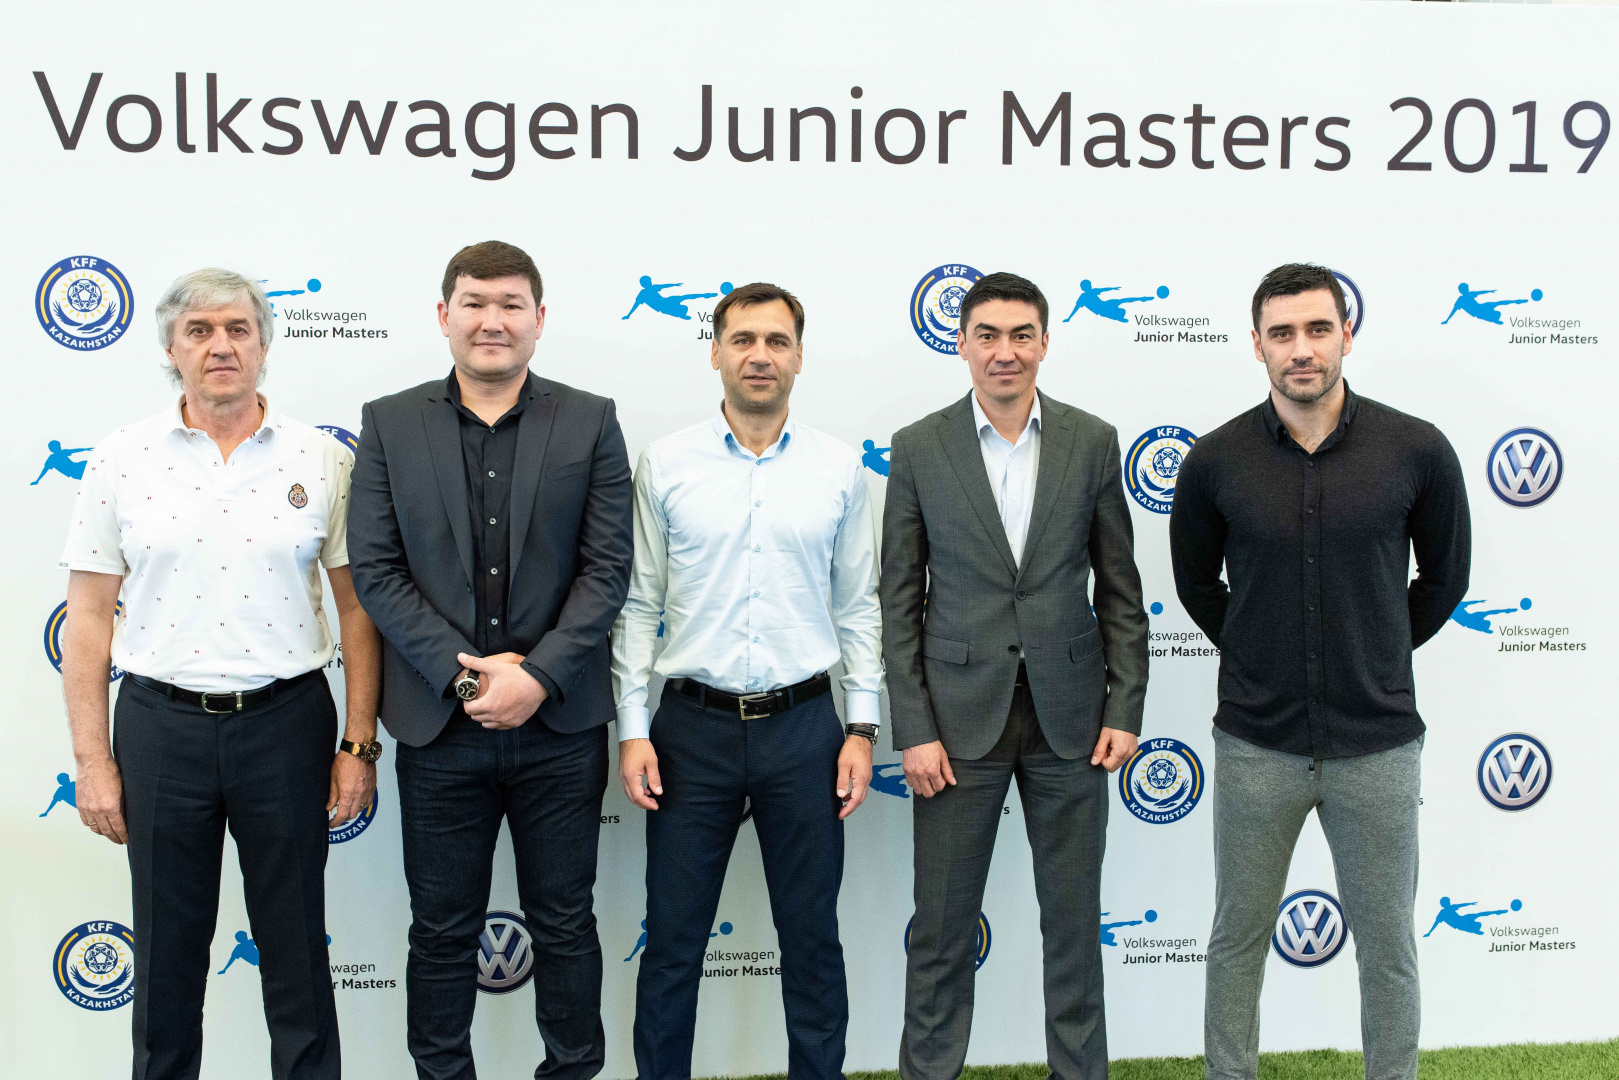 Masters 2019. Фольксваген Джуниор Мастерс. Junior Volkswagen Masters 2012 Россия. Мастер Юниор это. Фольксваген Джуниор Мастерс 2013 Автобан Запад плюс.